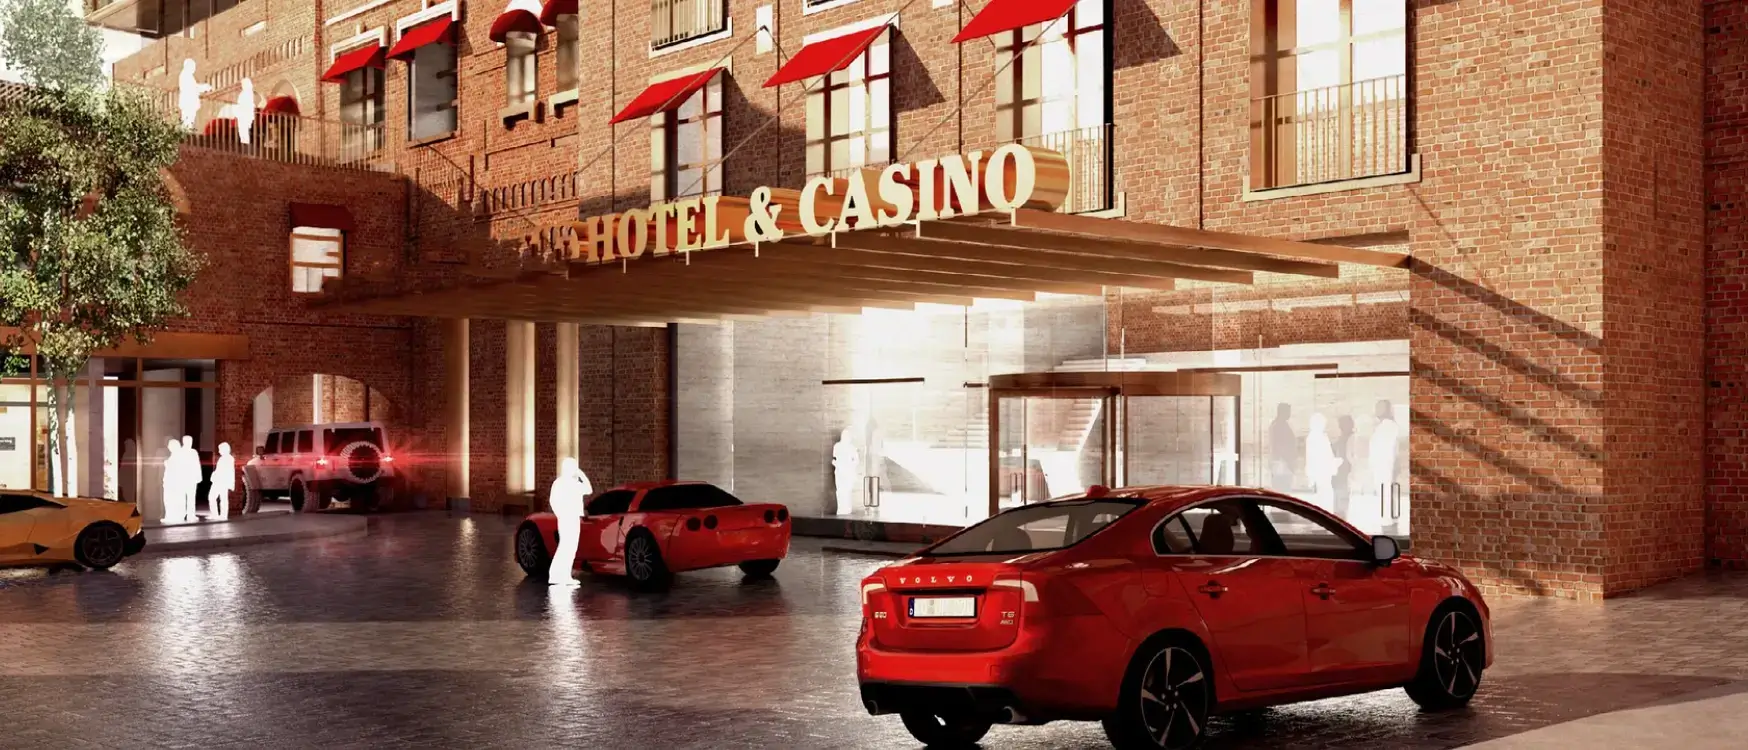 Hotel and casino